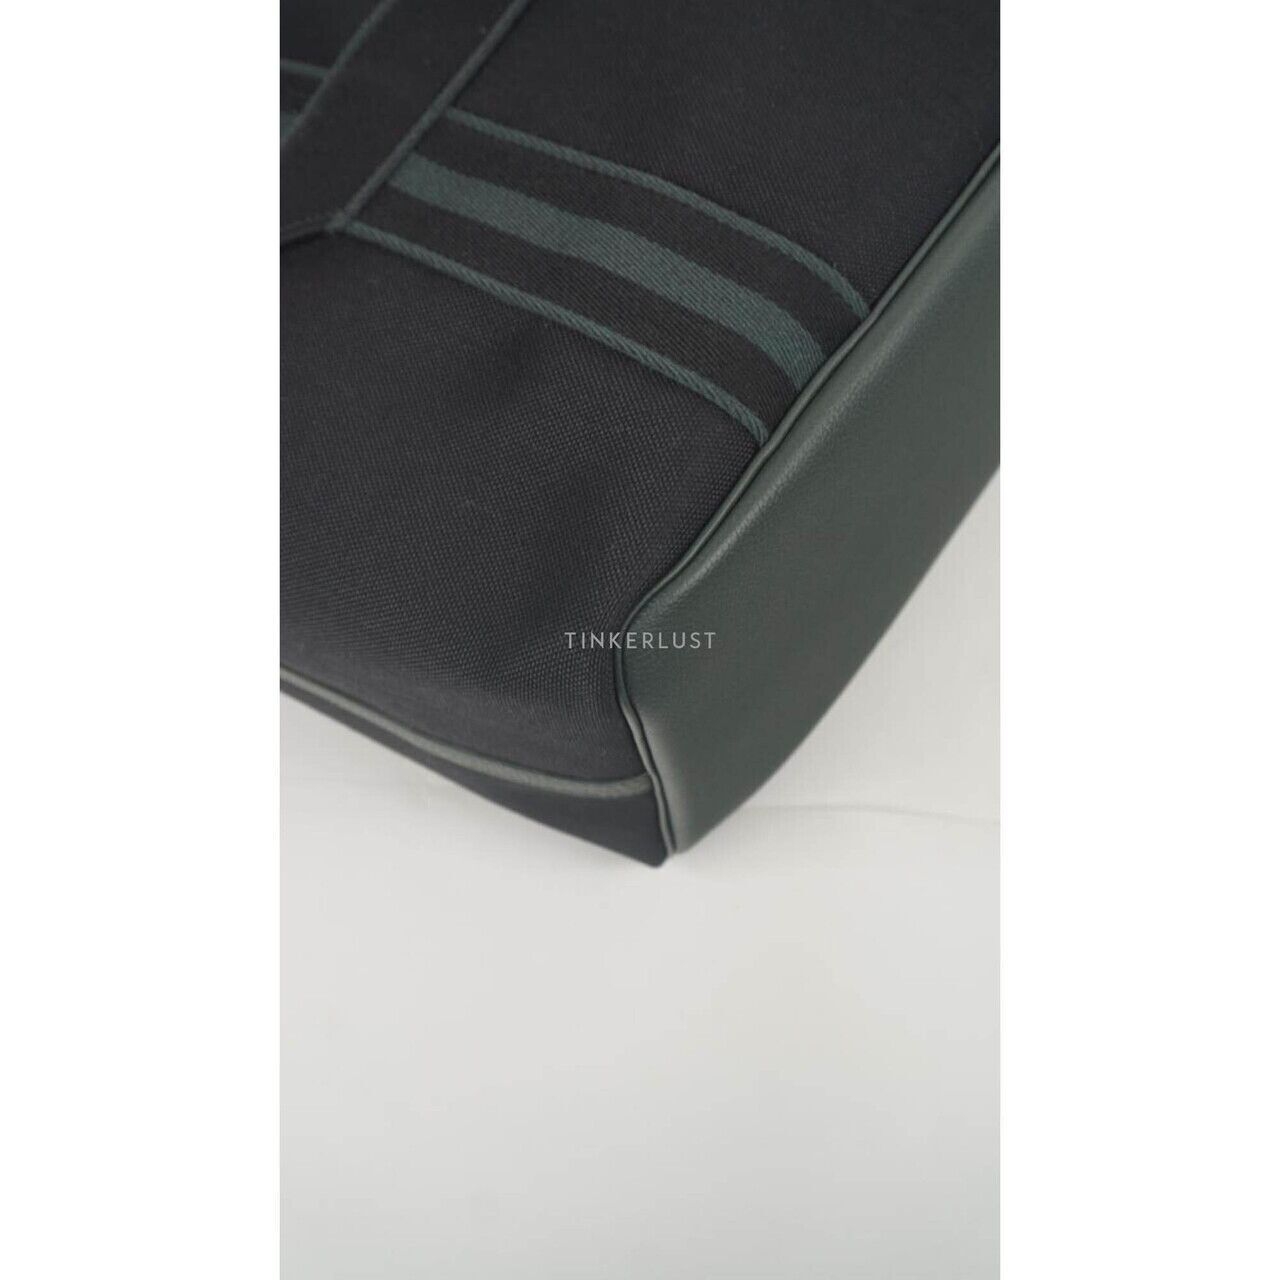 Hermes Pursangle Vert Noir Canvas #B Tote Bag